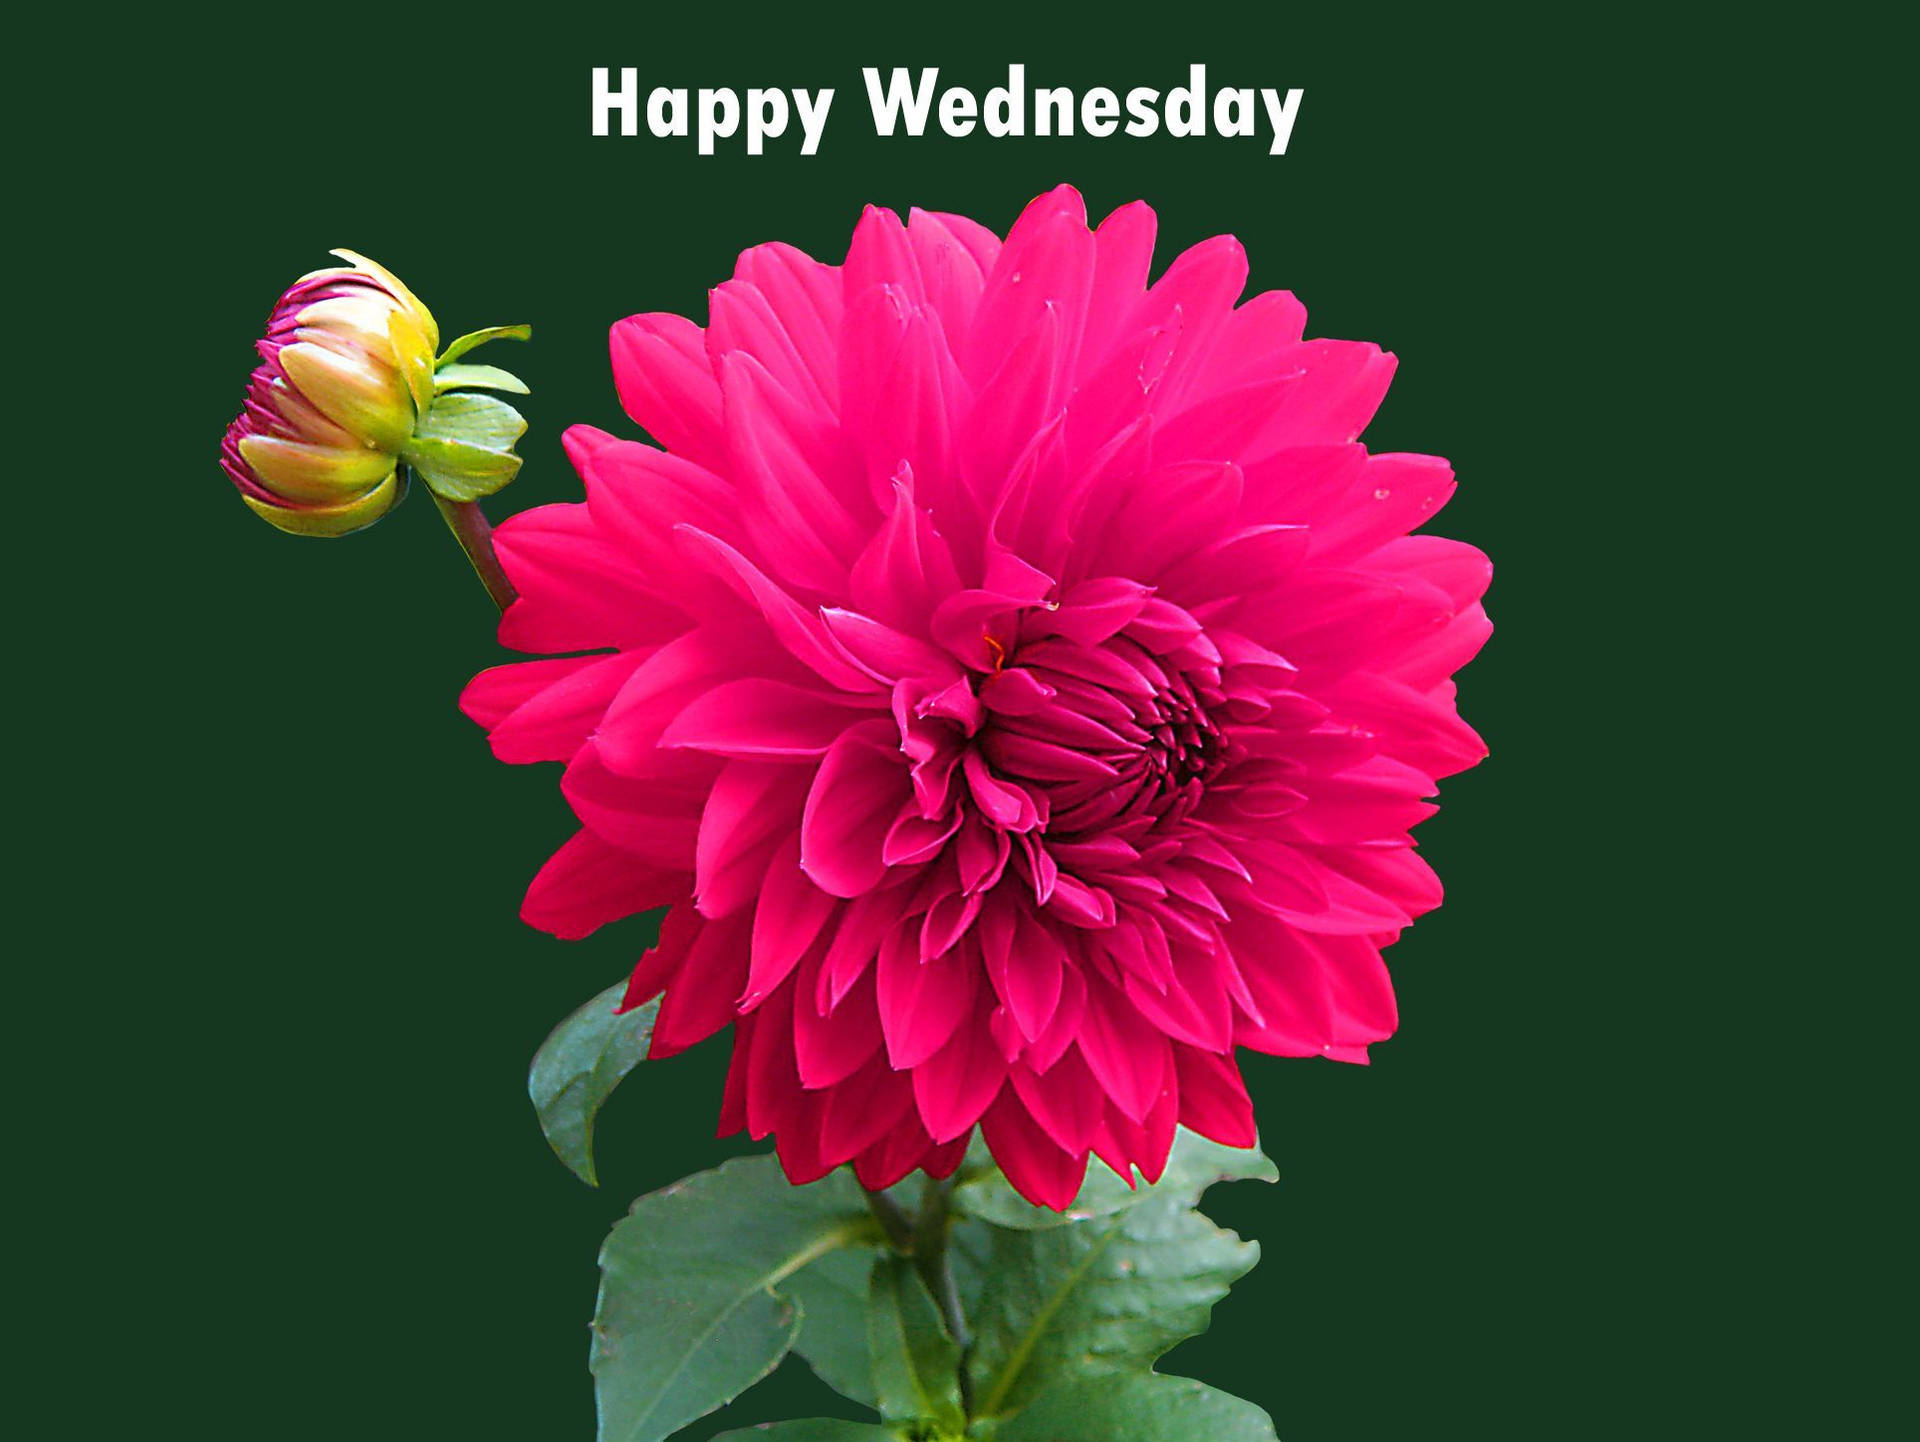 Happy Wednesday Greeting Pink Dahlia